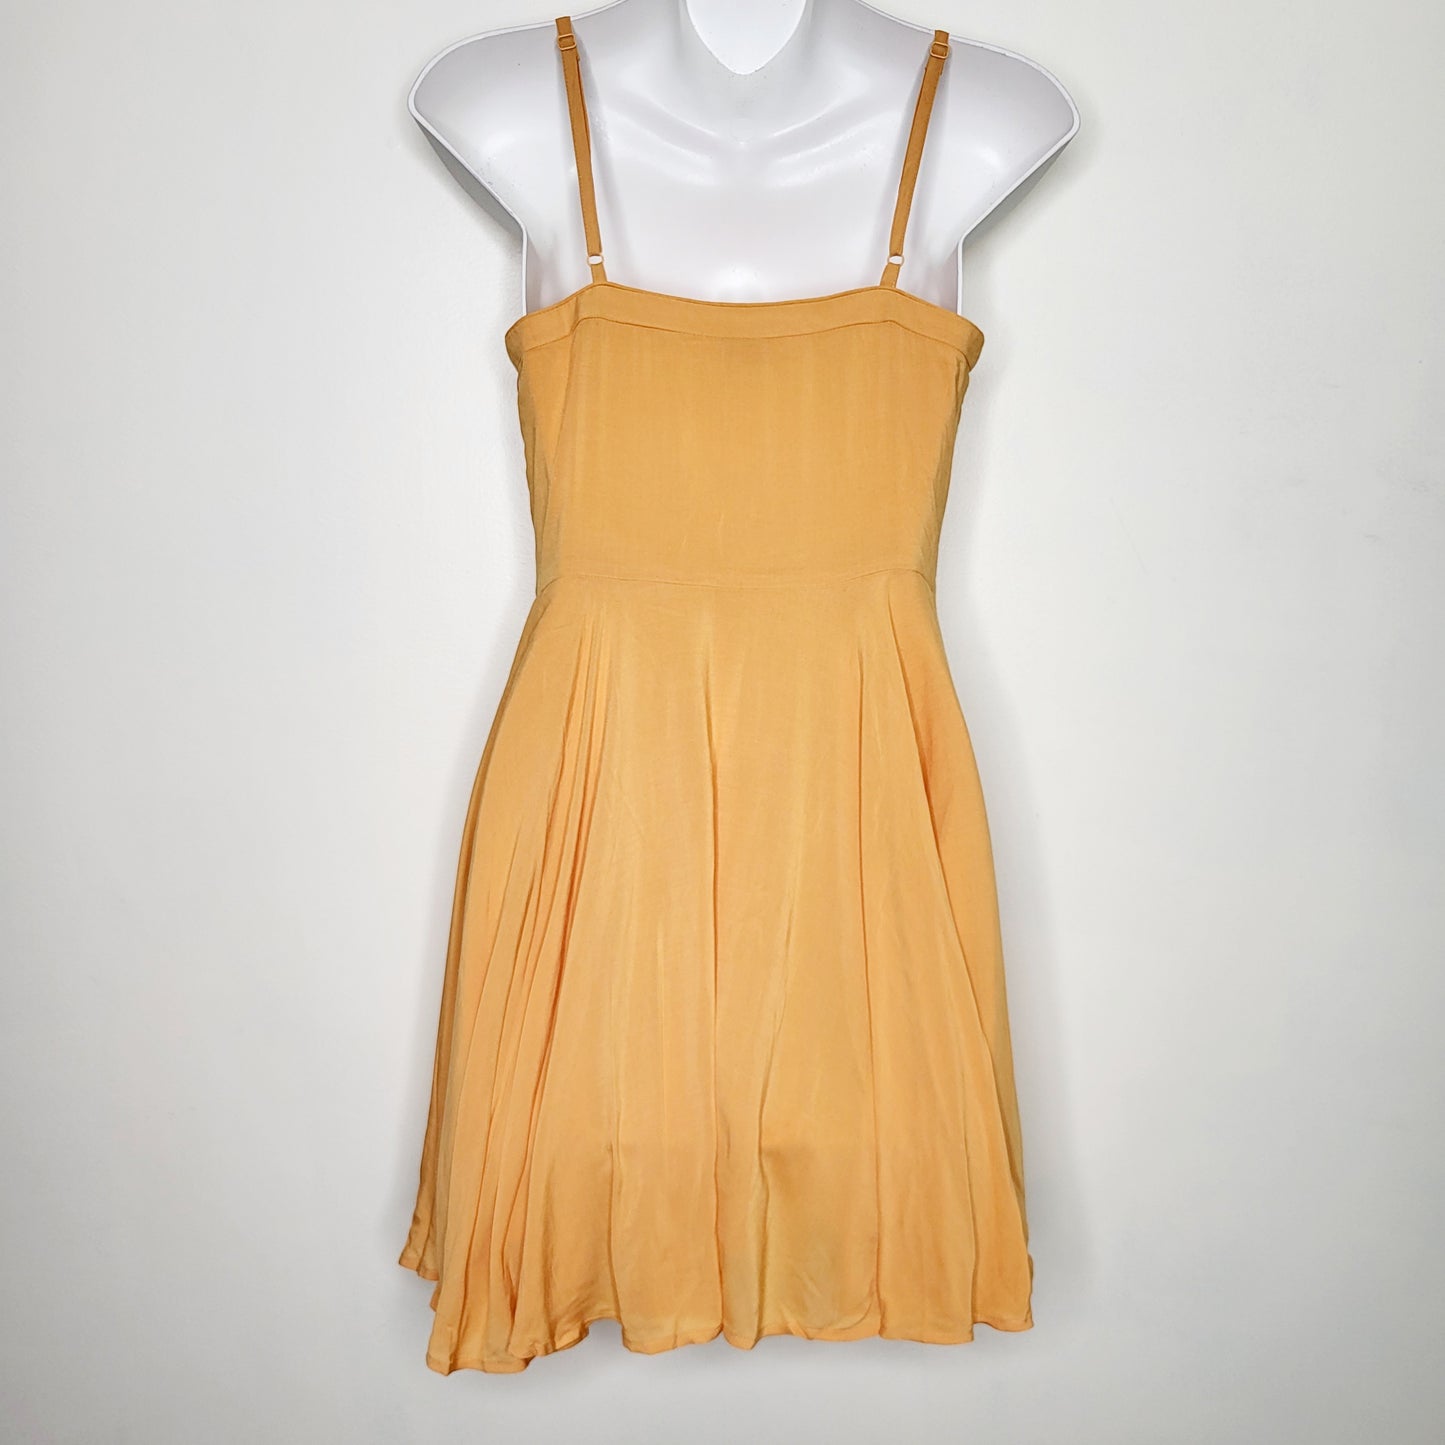 CSWRTZ1 - Artizia Sunday best tangerine "Lapinski" dress, size 2, good condition